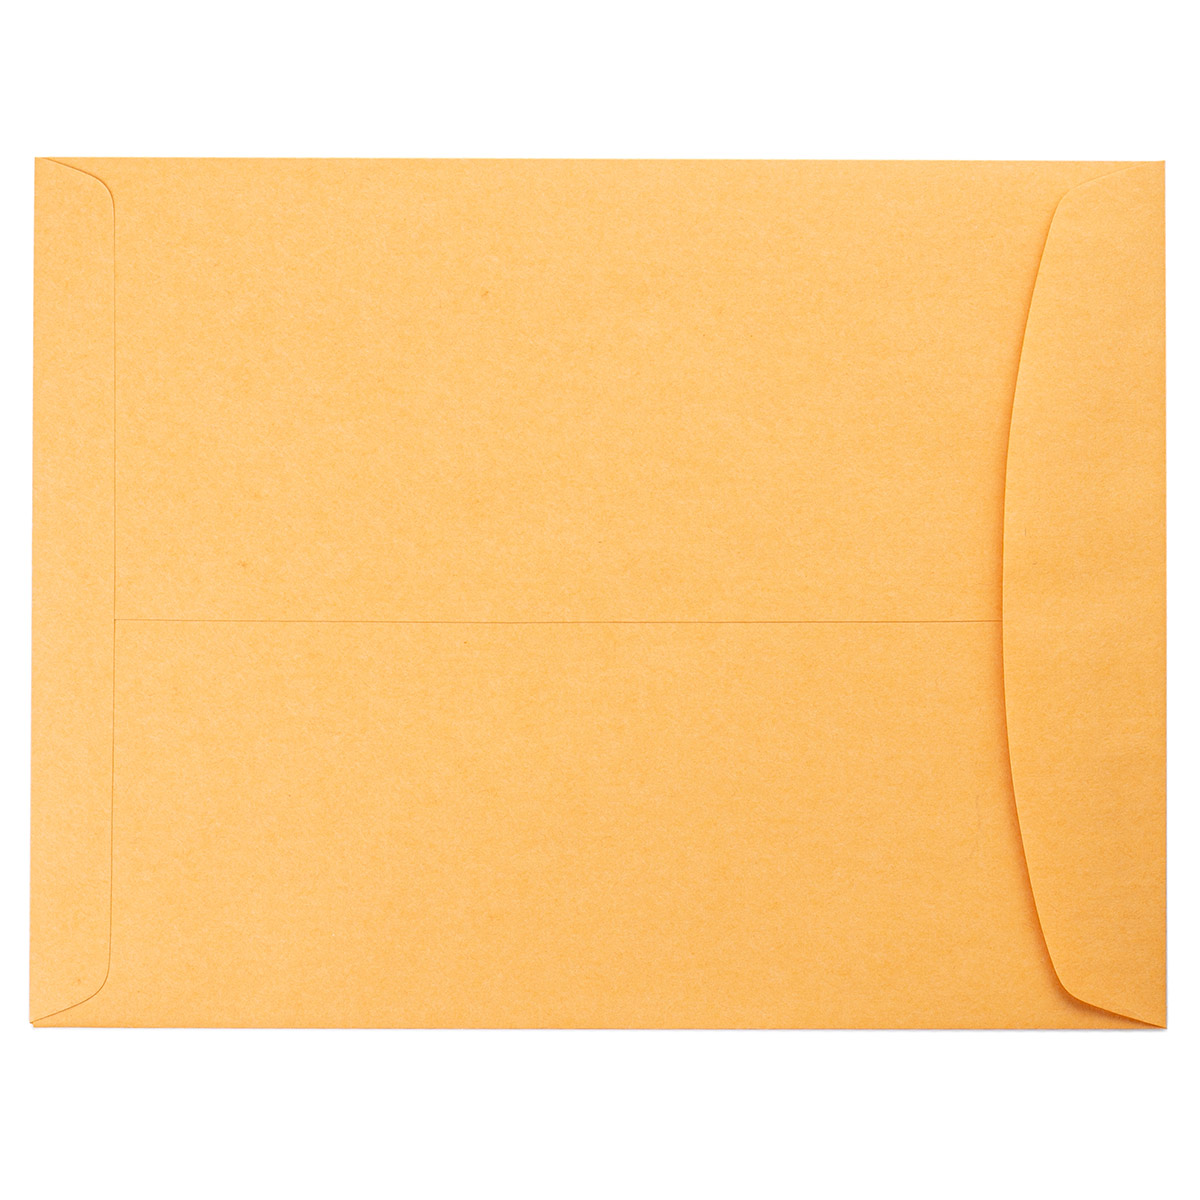 10 x 13 Catalog Envelope Brown Kraft - The Envelope Company